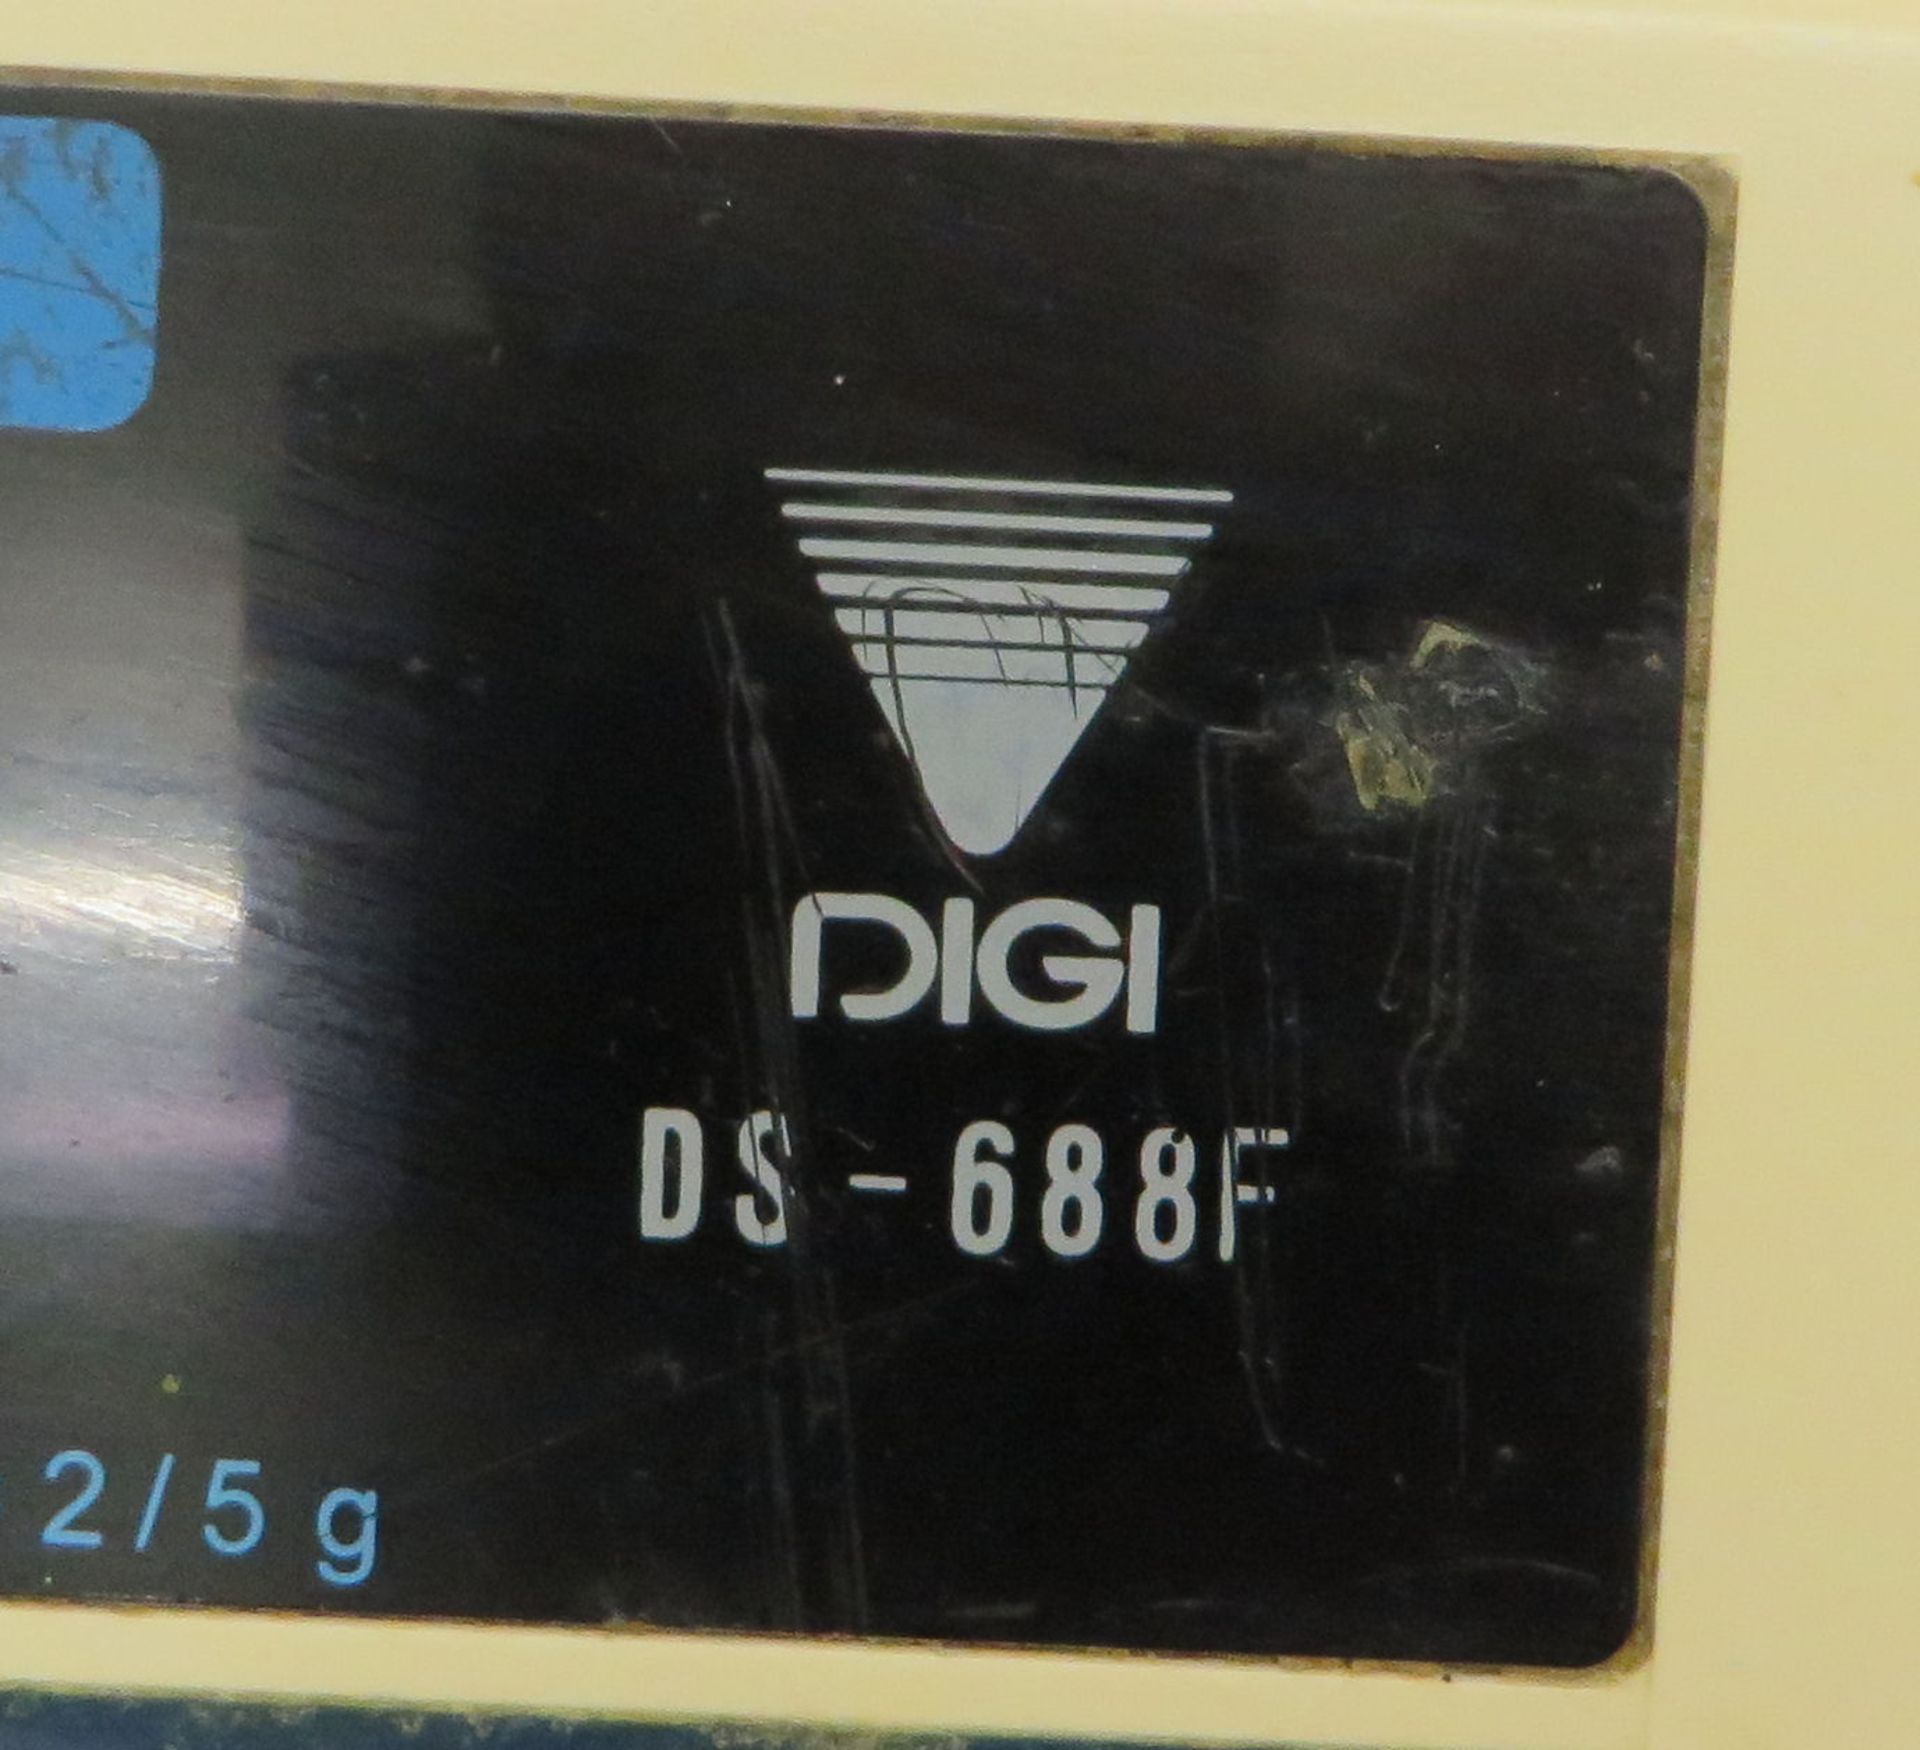 1 x Digi DS-688F Countertop Digital Scale - Ref: 025 - CL173 - Location: Altrincham WA15 Item is in - Image 4 of 4